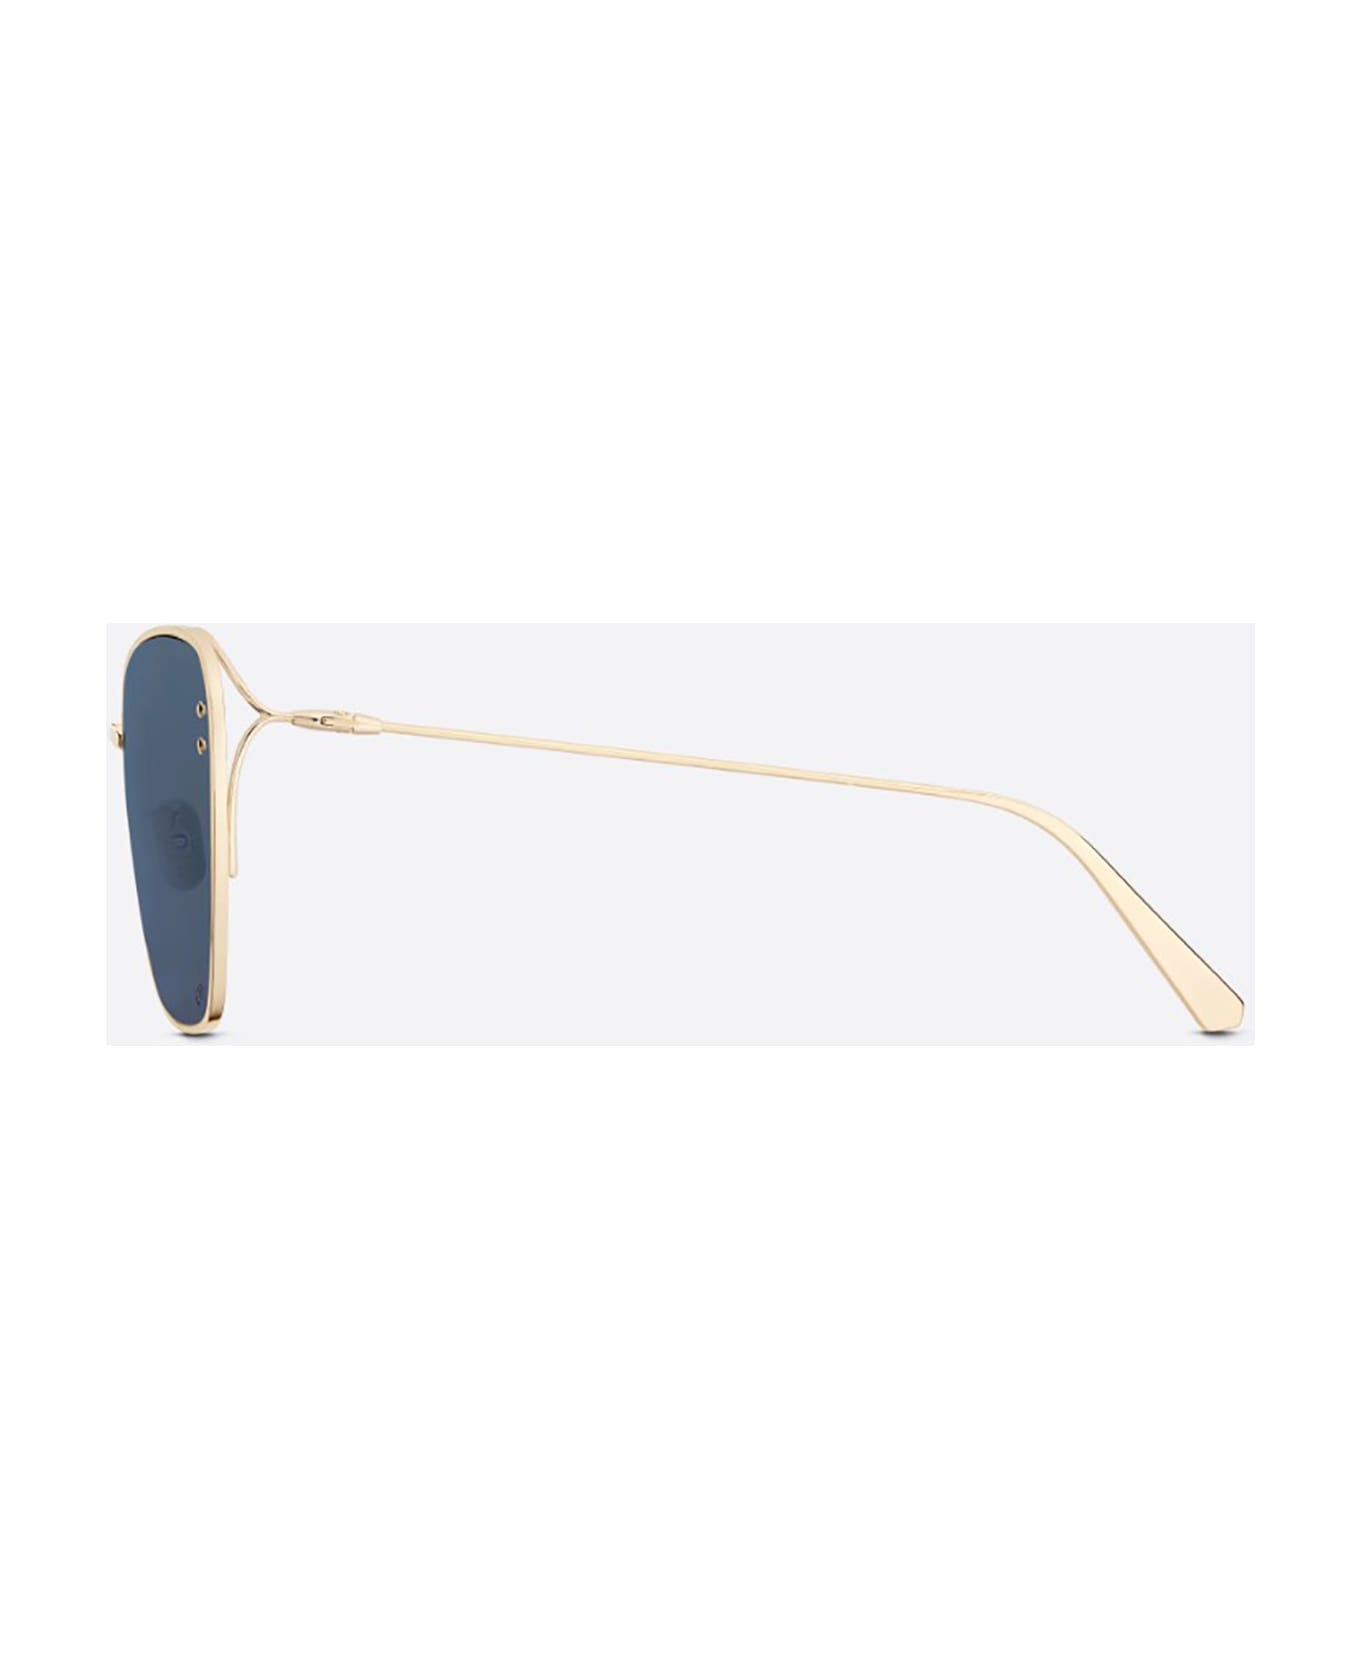 Dior Eyewear MISSDIOR B2U Sunglasses サングラス